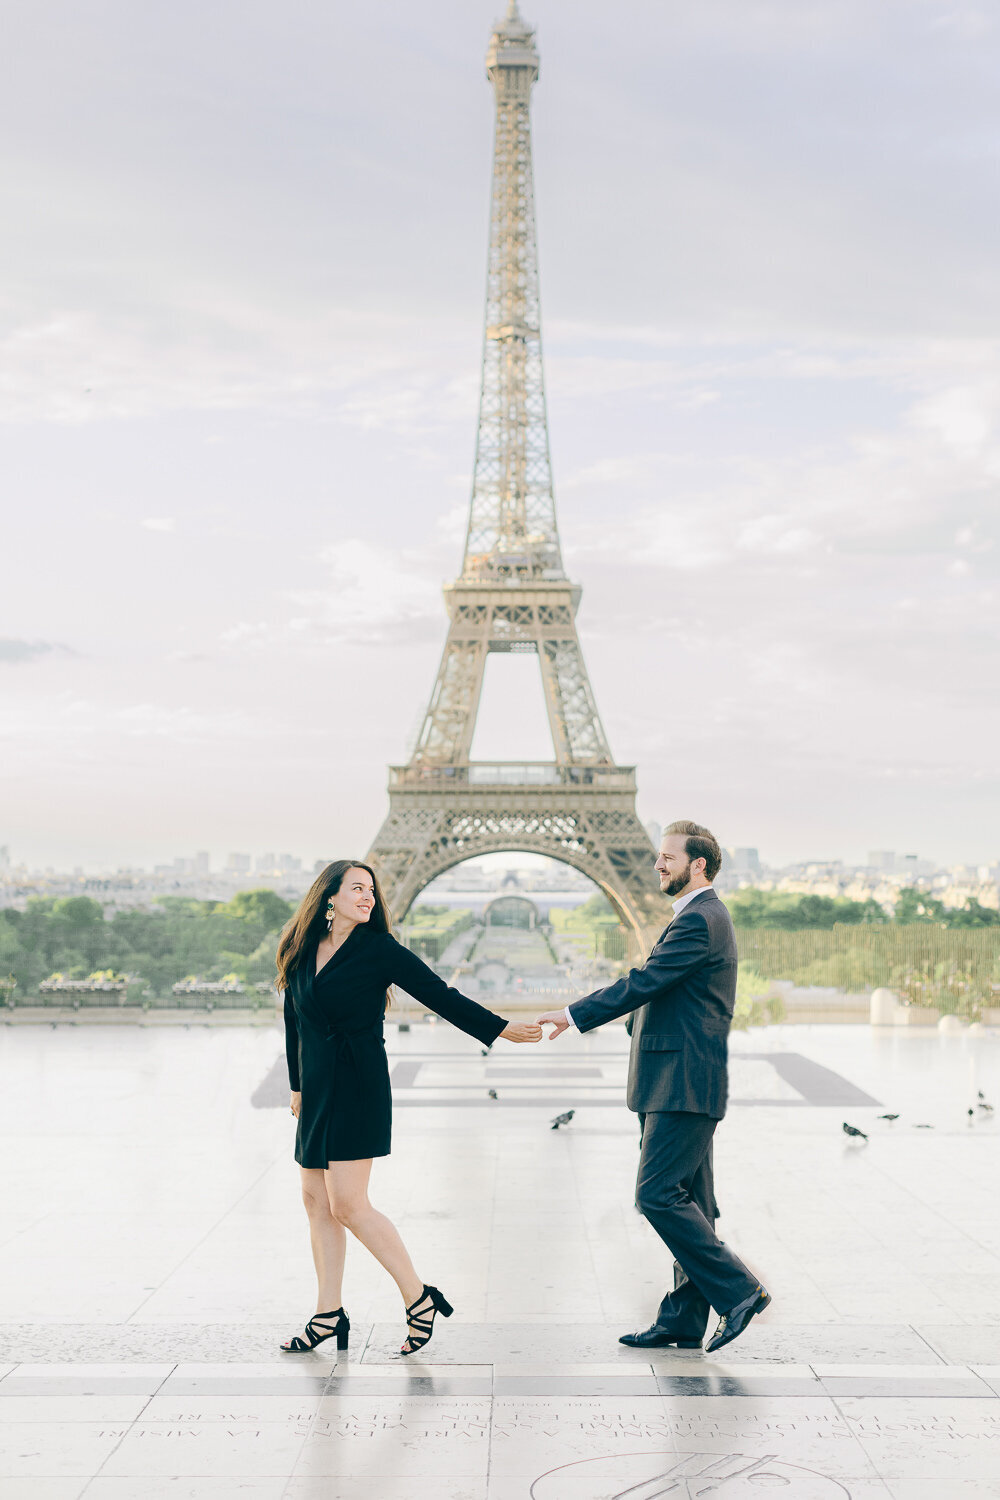 Paris editorial engagement couple session - Paris wedding photographer - Juno Photo